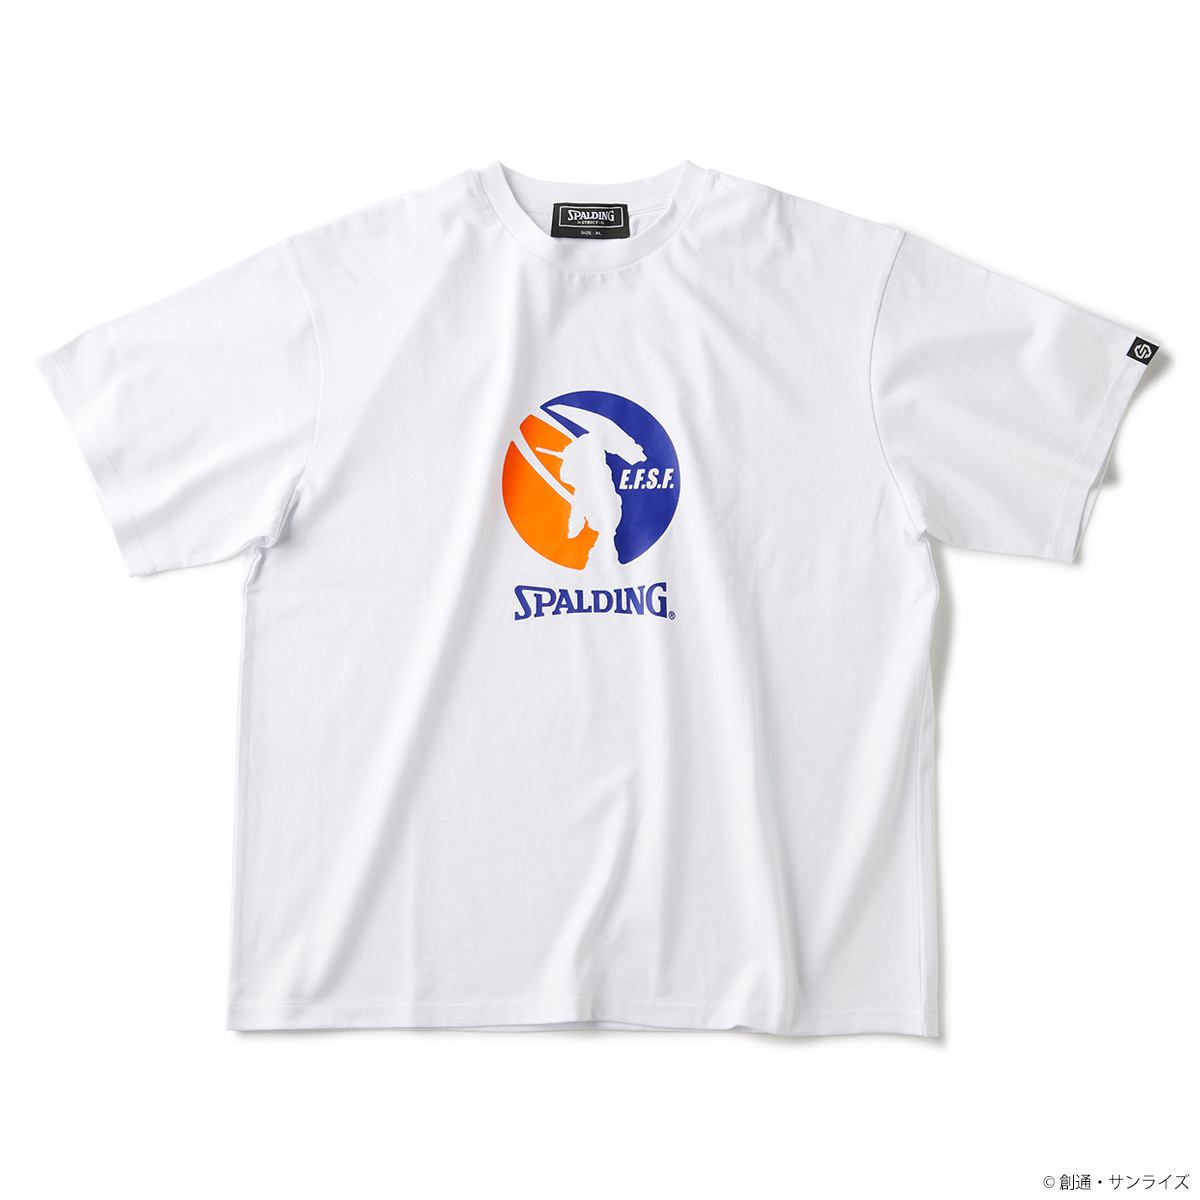 STRICT-G SPALDING『機動戦士ガンダム』Tシャツ ガンダムロゴ